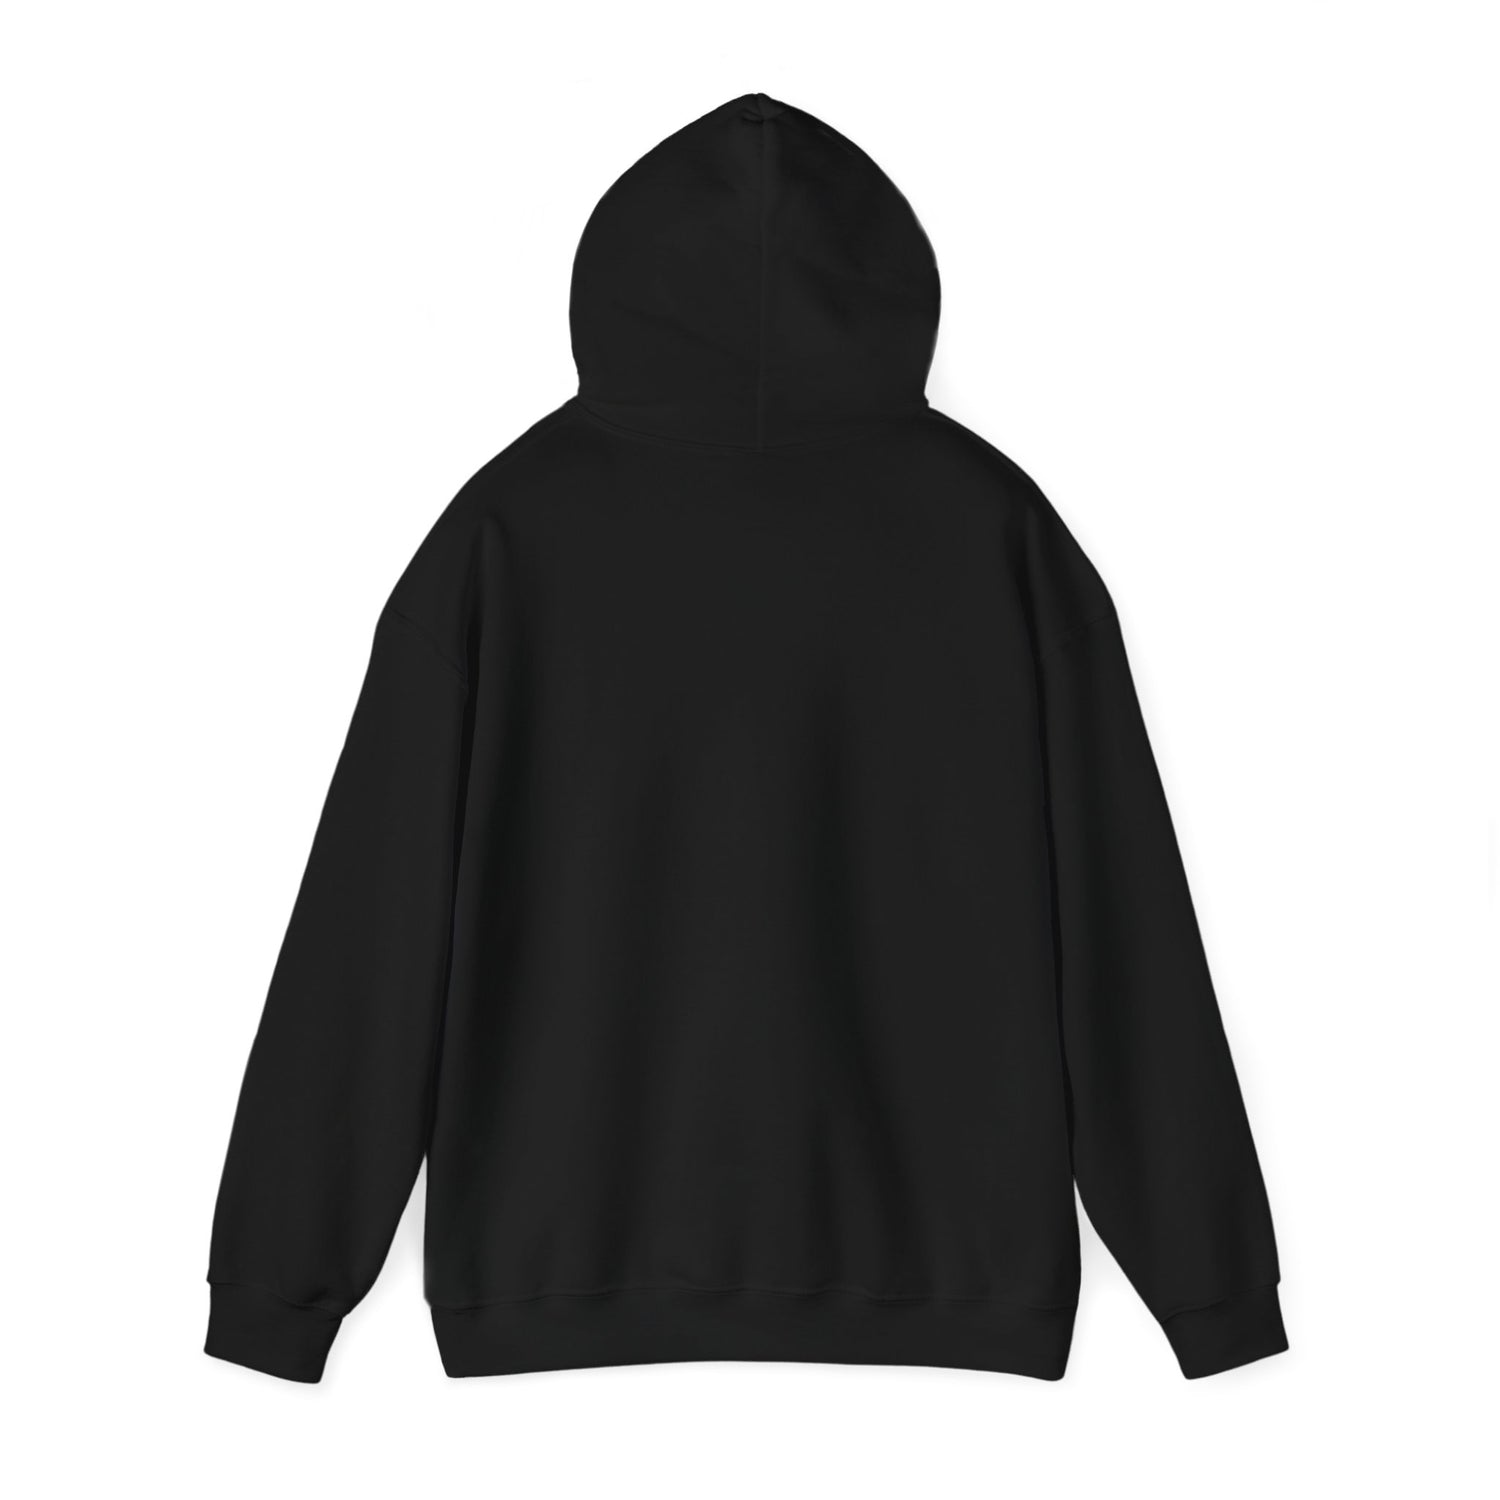 Your favorite ex Unisex Heavy Blend Hooded Sweatshirt